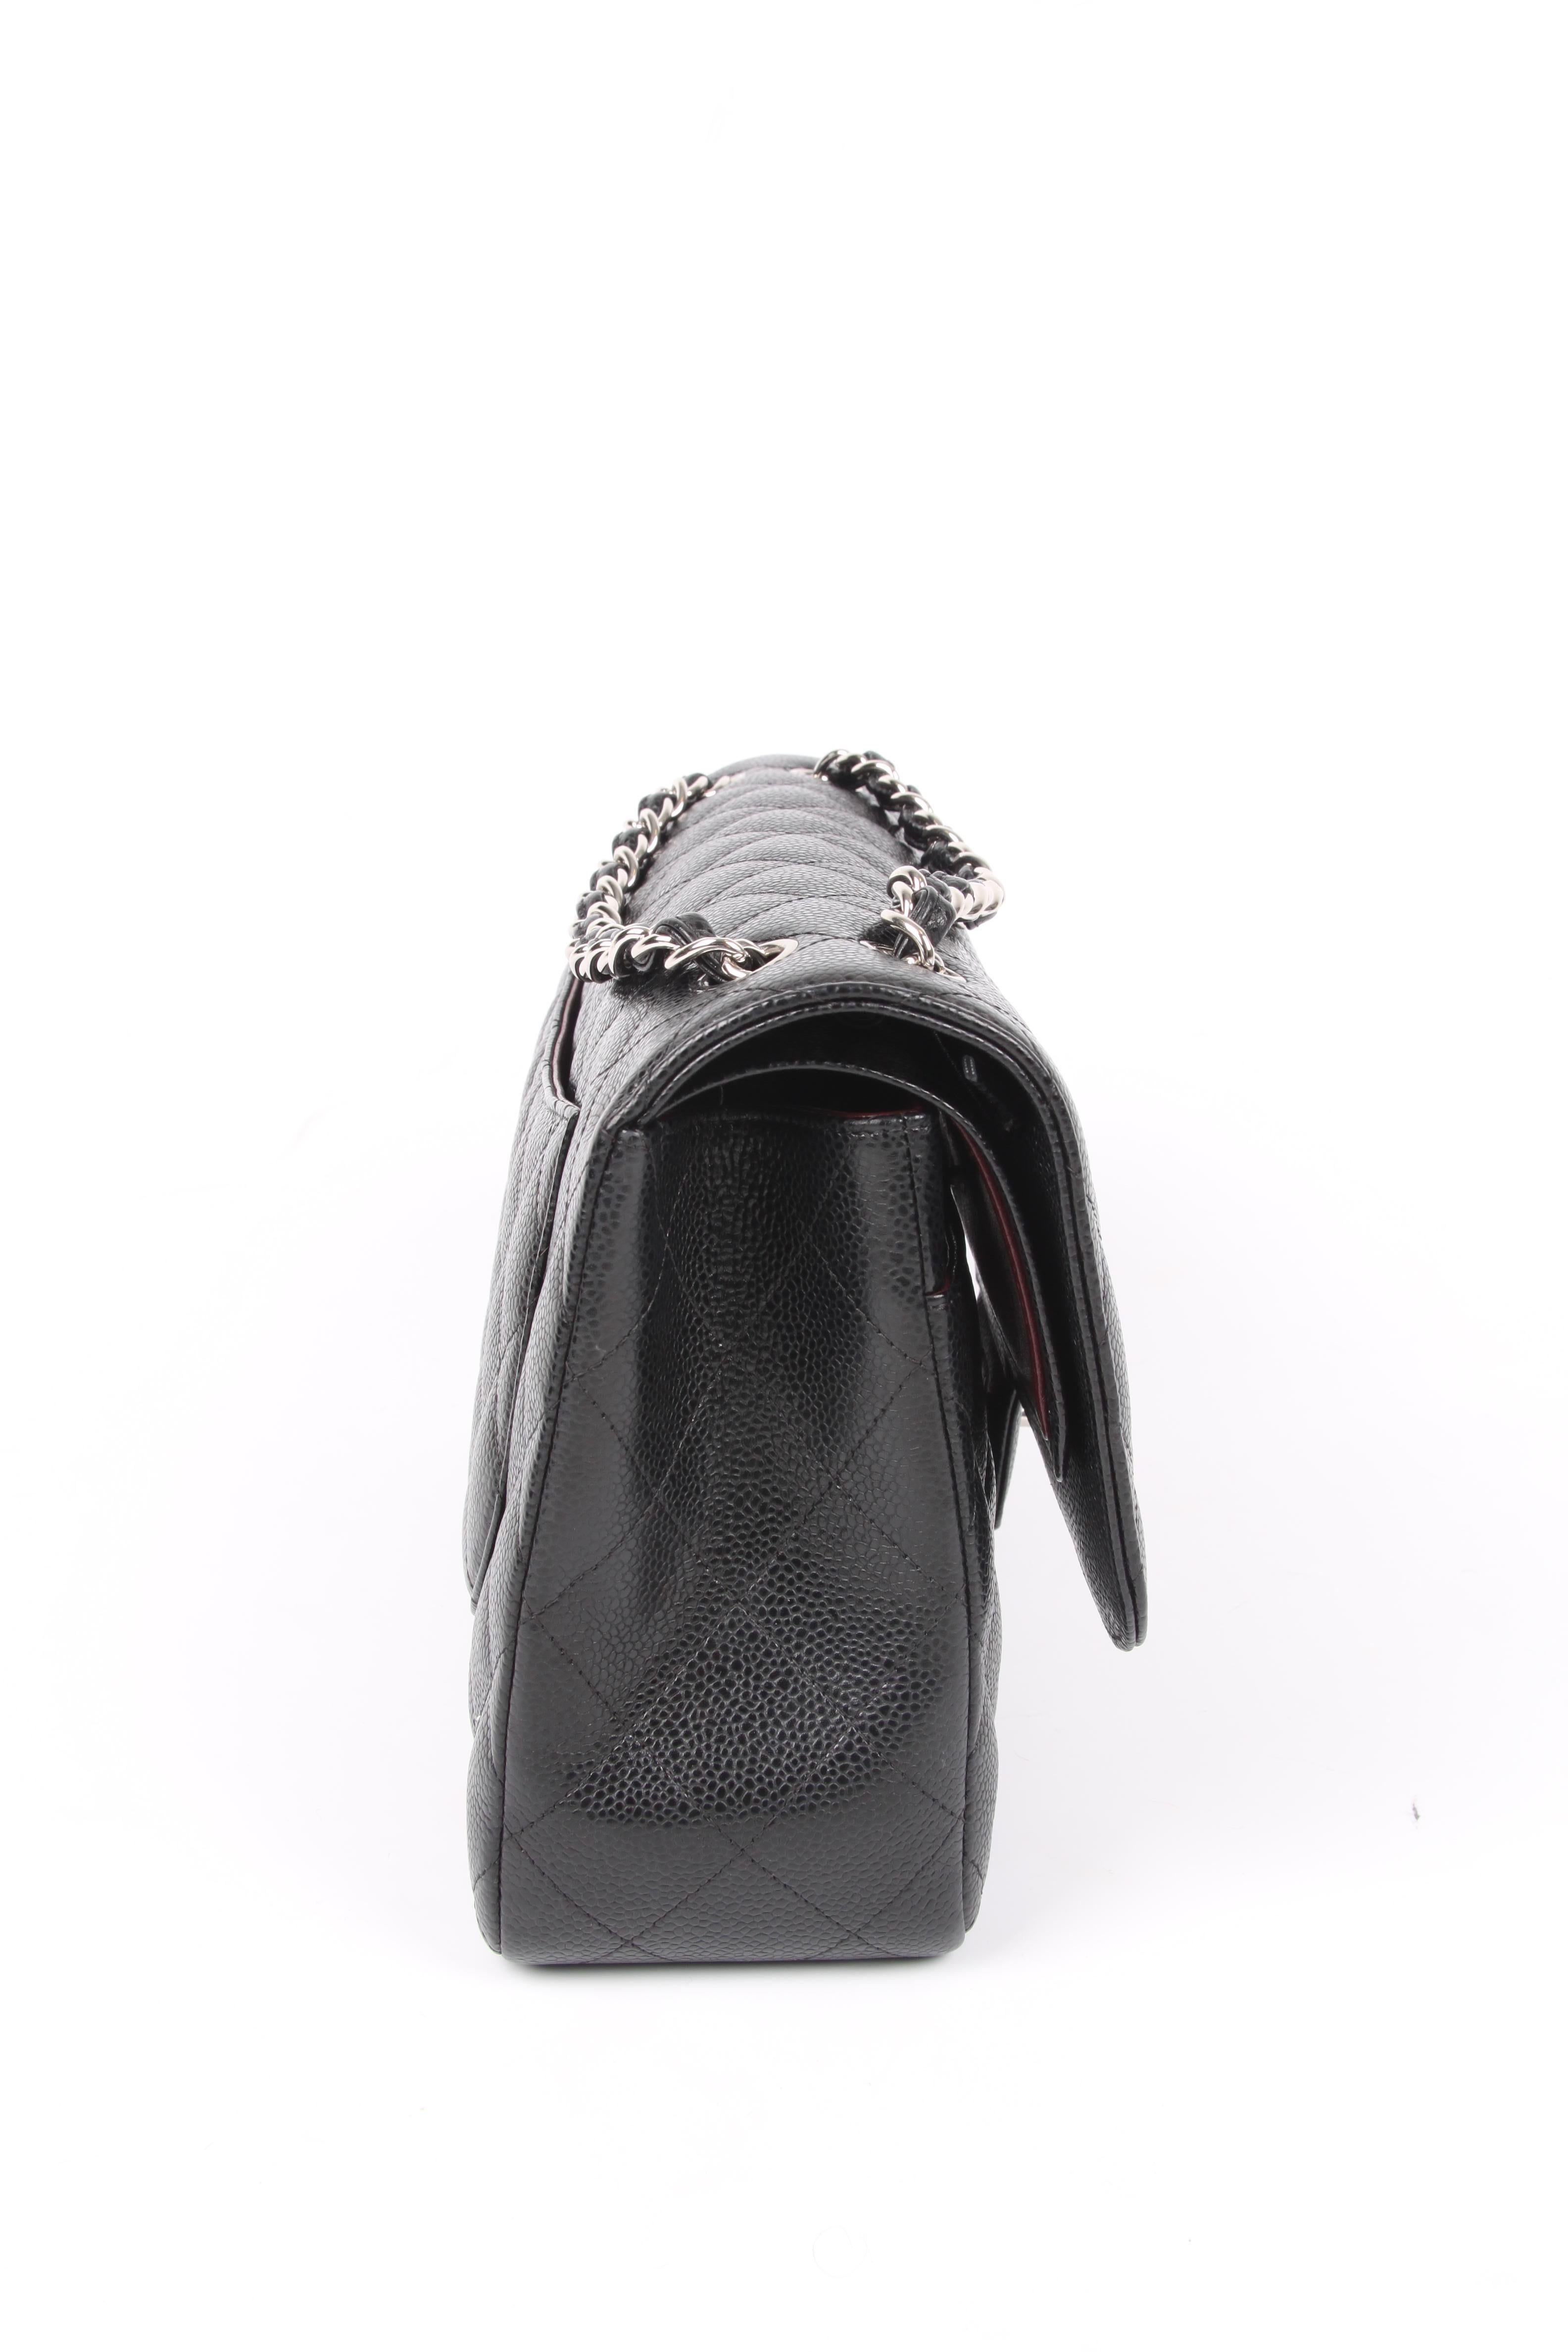 Black   Chanel 2.55 Timeless 2018 black caviar leather/silver   